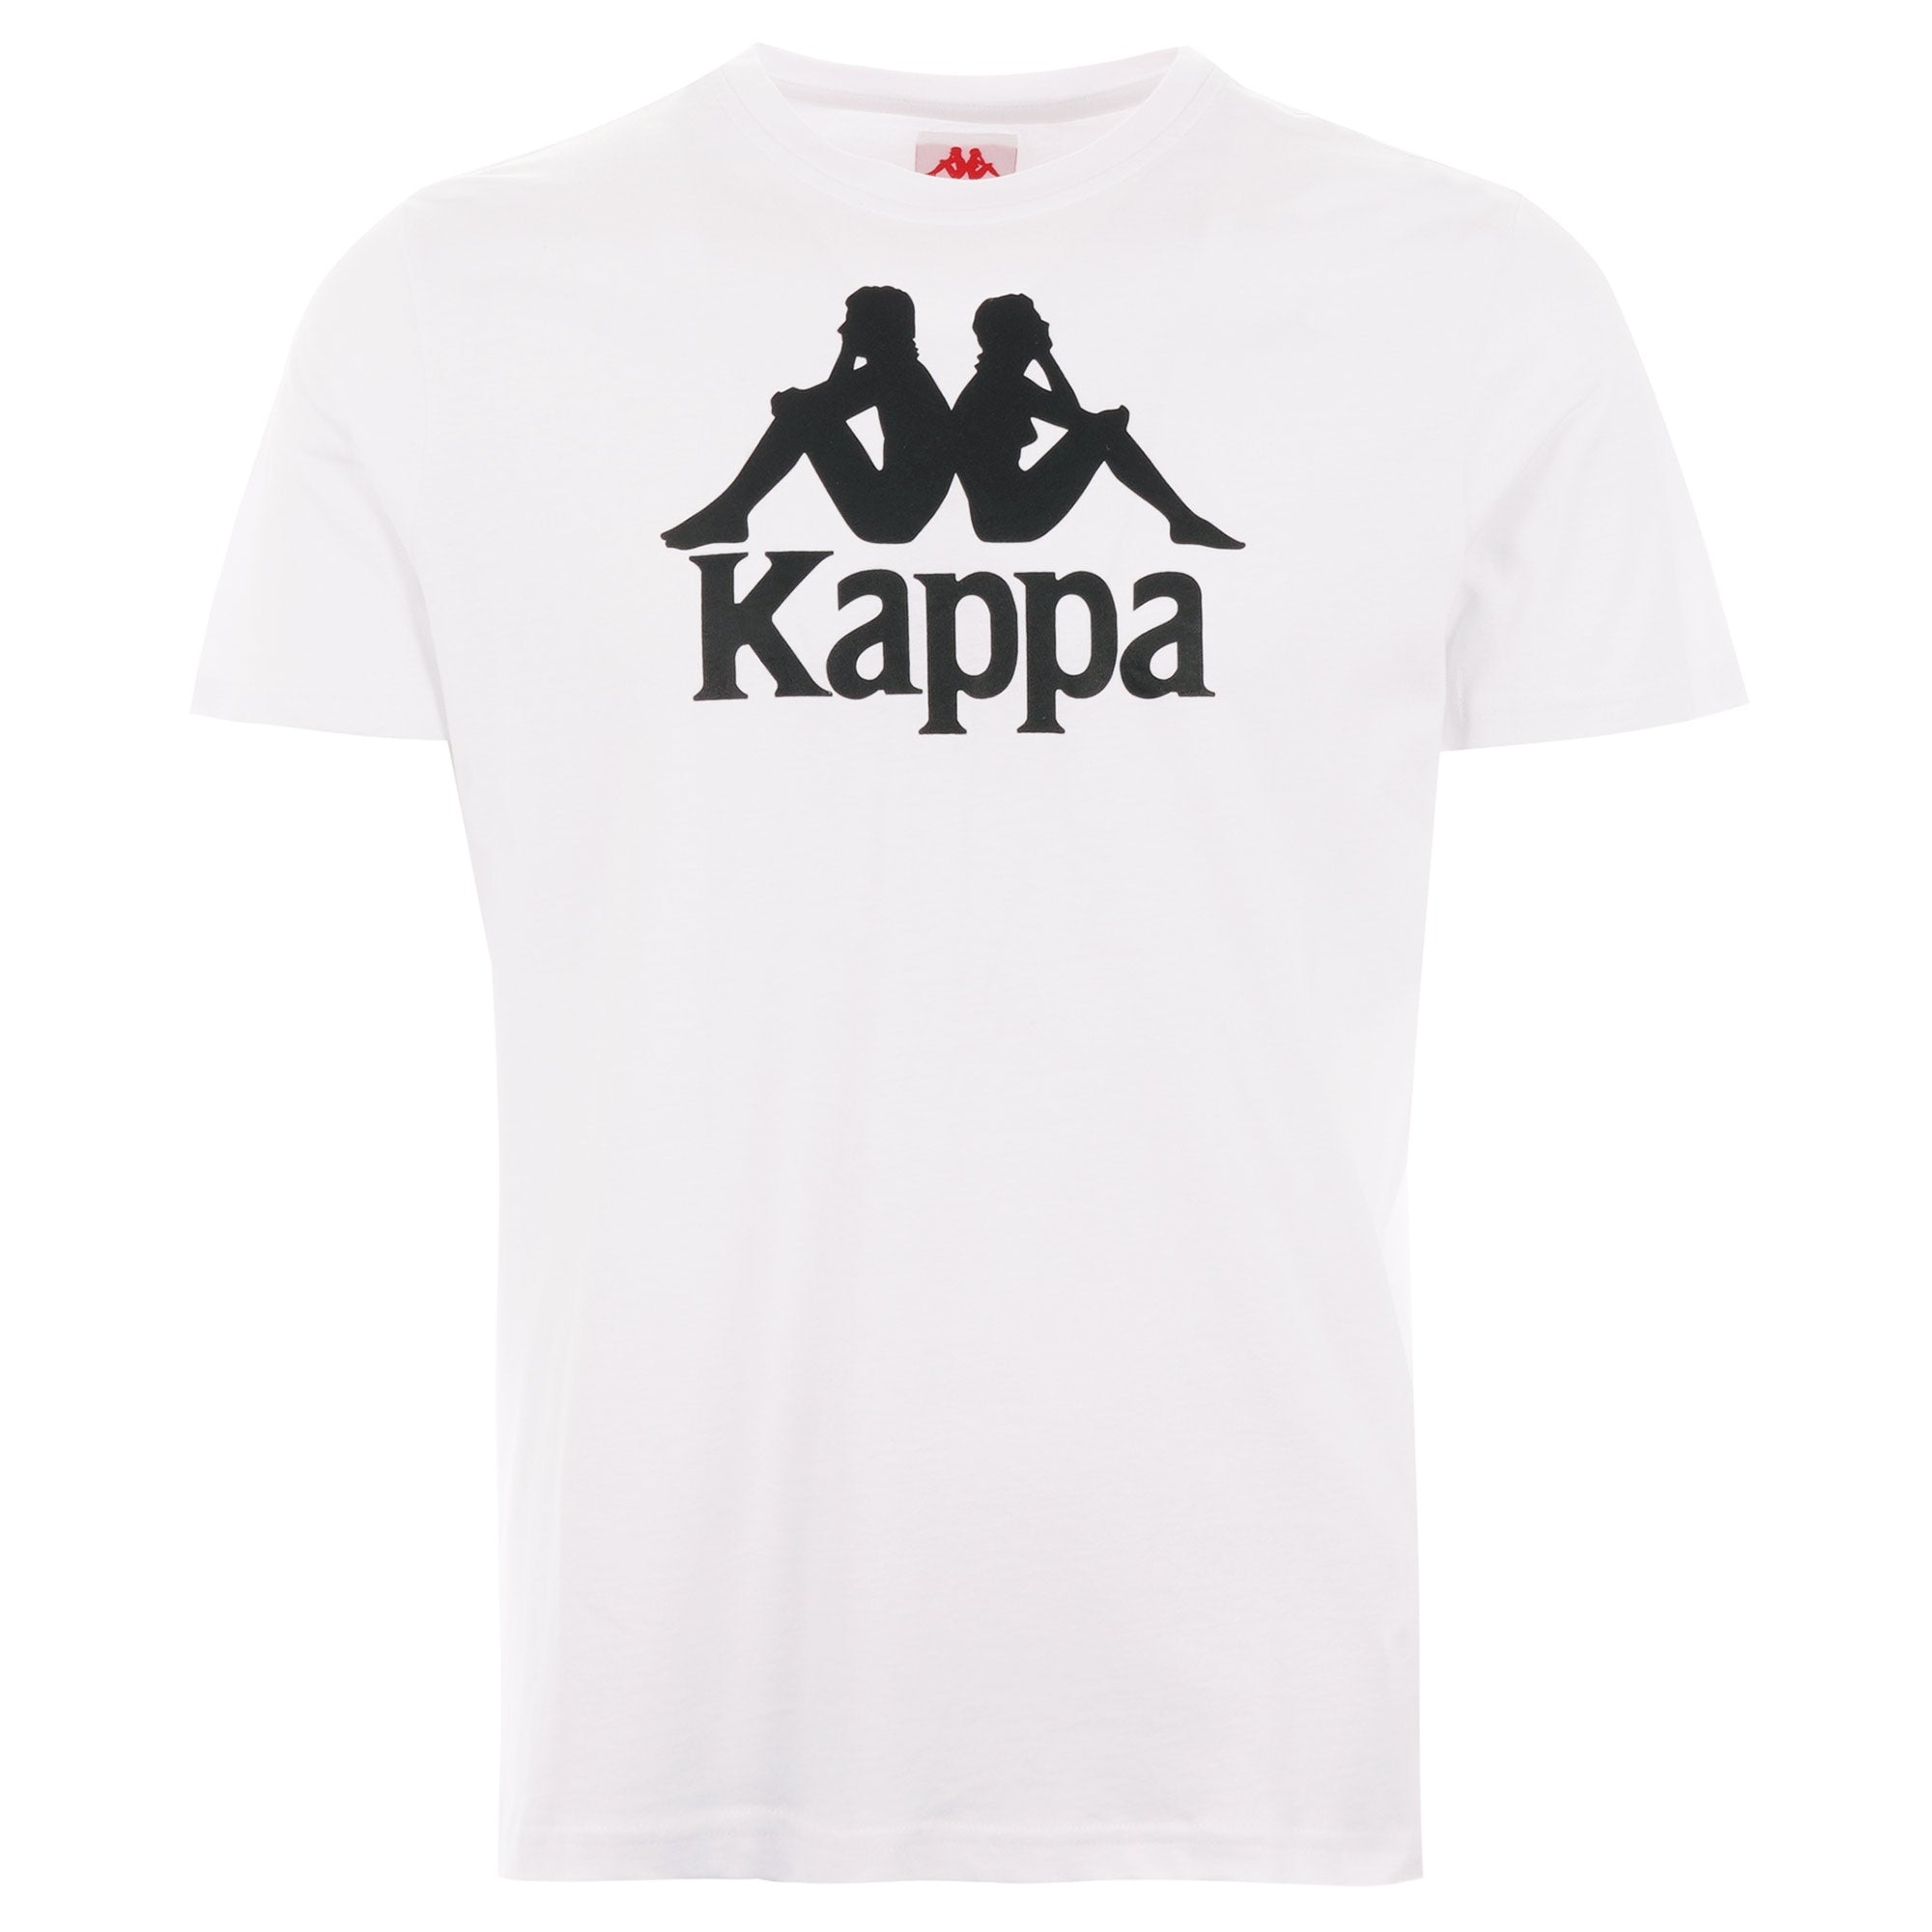 Kappa Men's Authentic Estessi T-shirt - White/Black